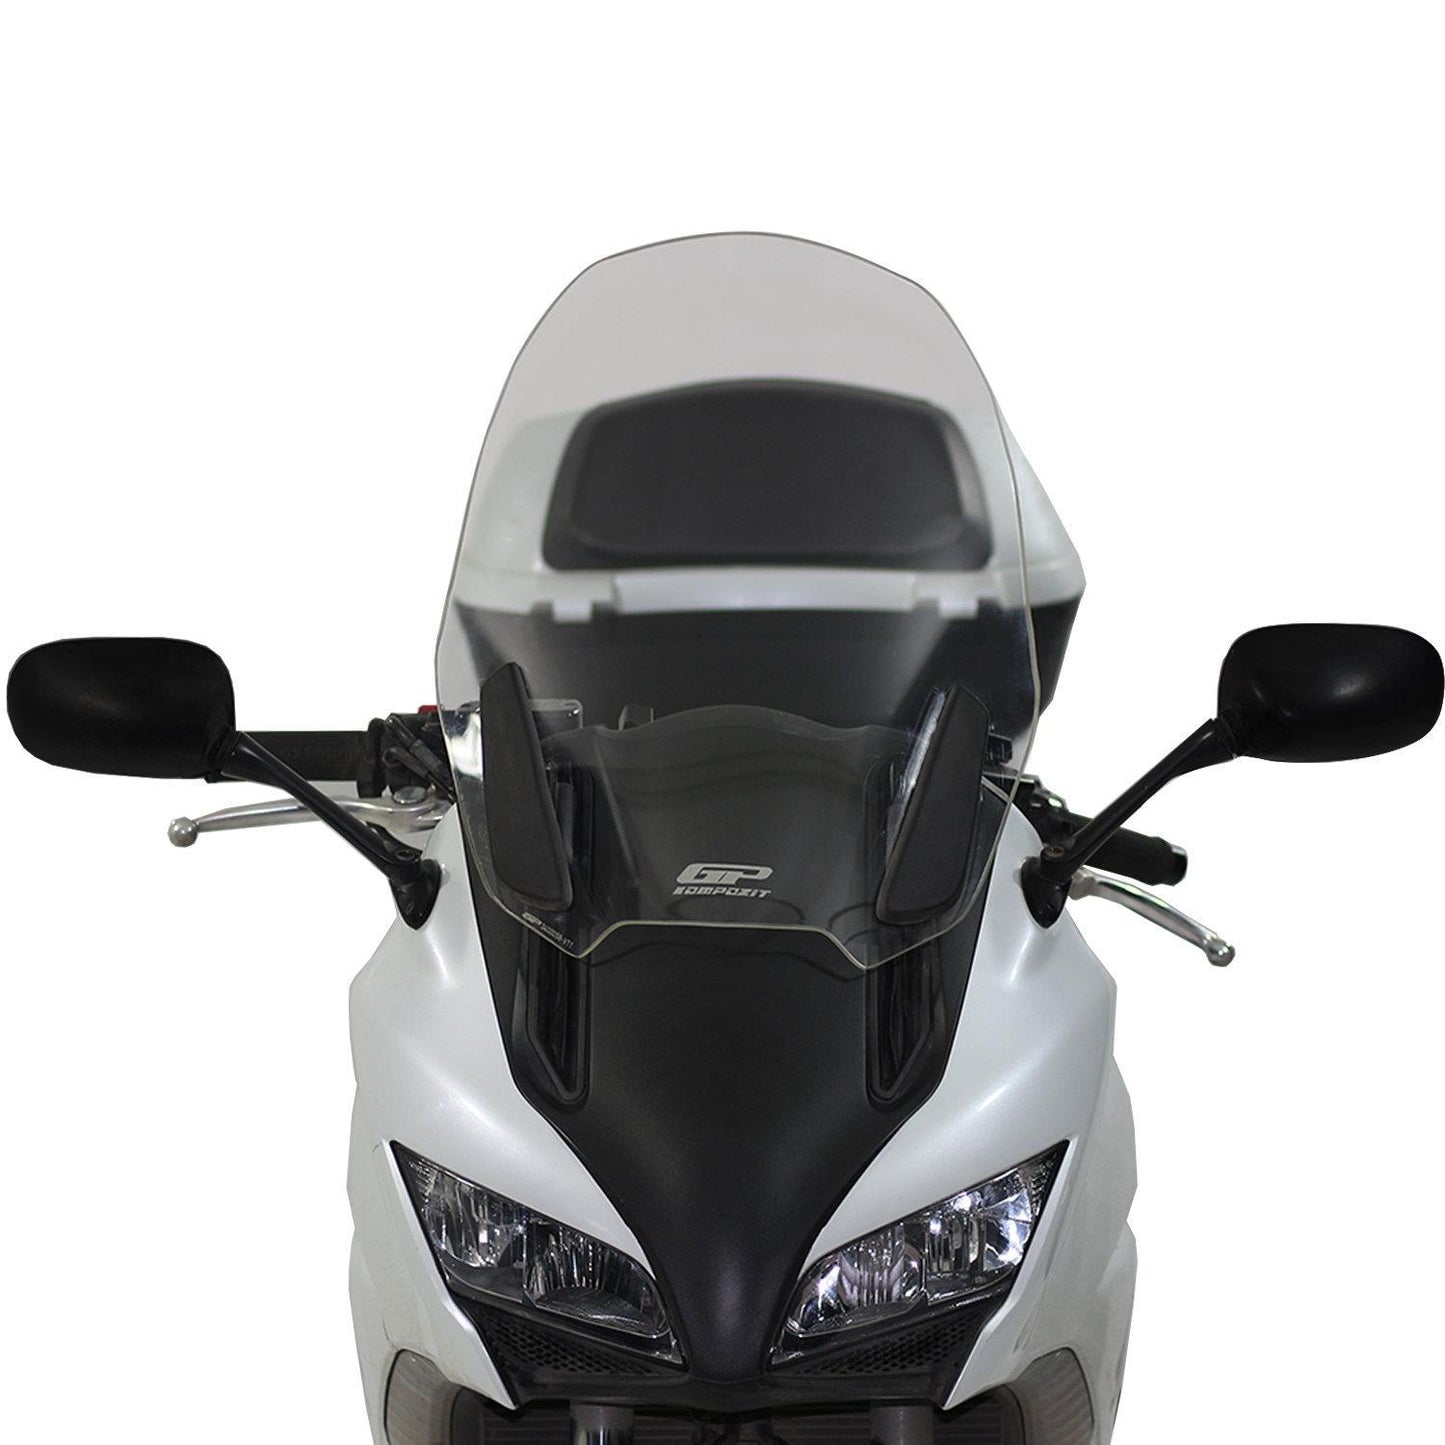 Honda CBF 1000 windscreen 50 cm clear 10-17